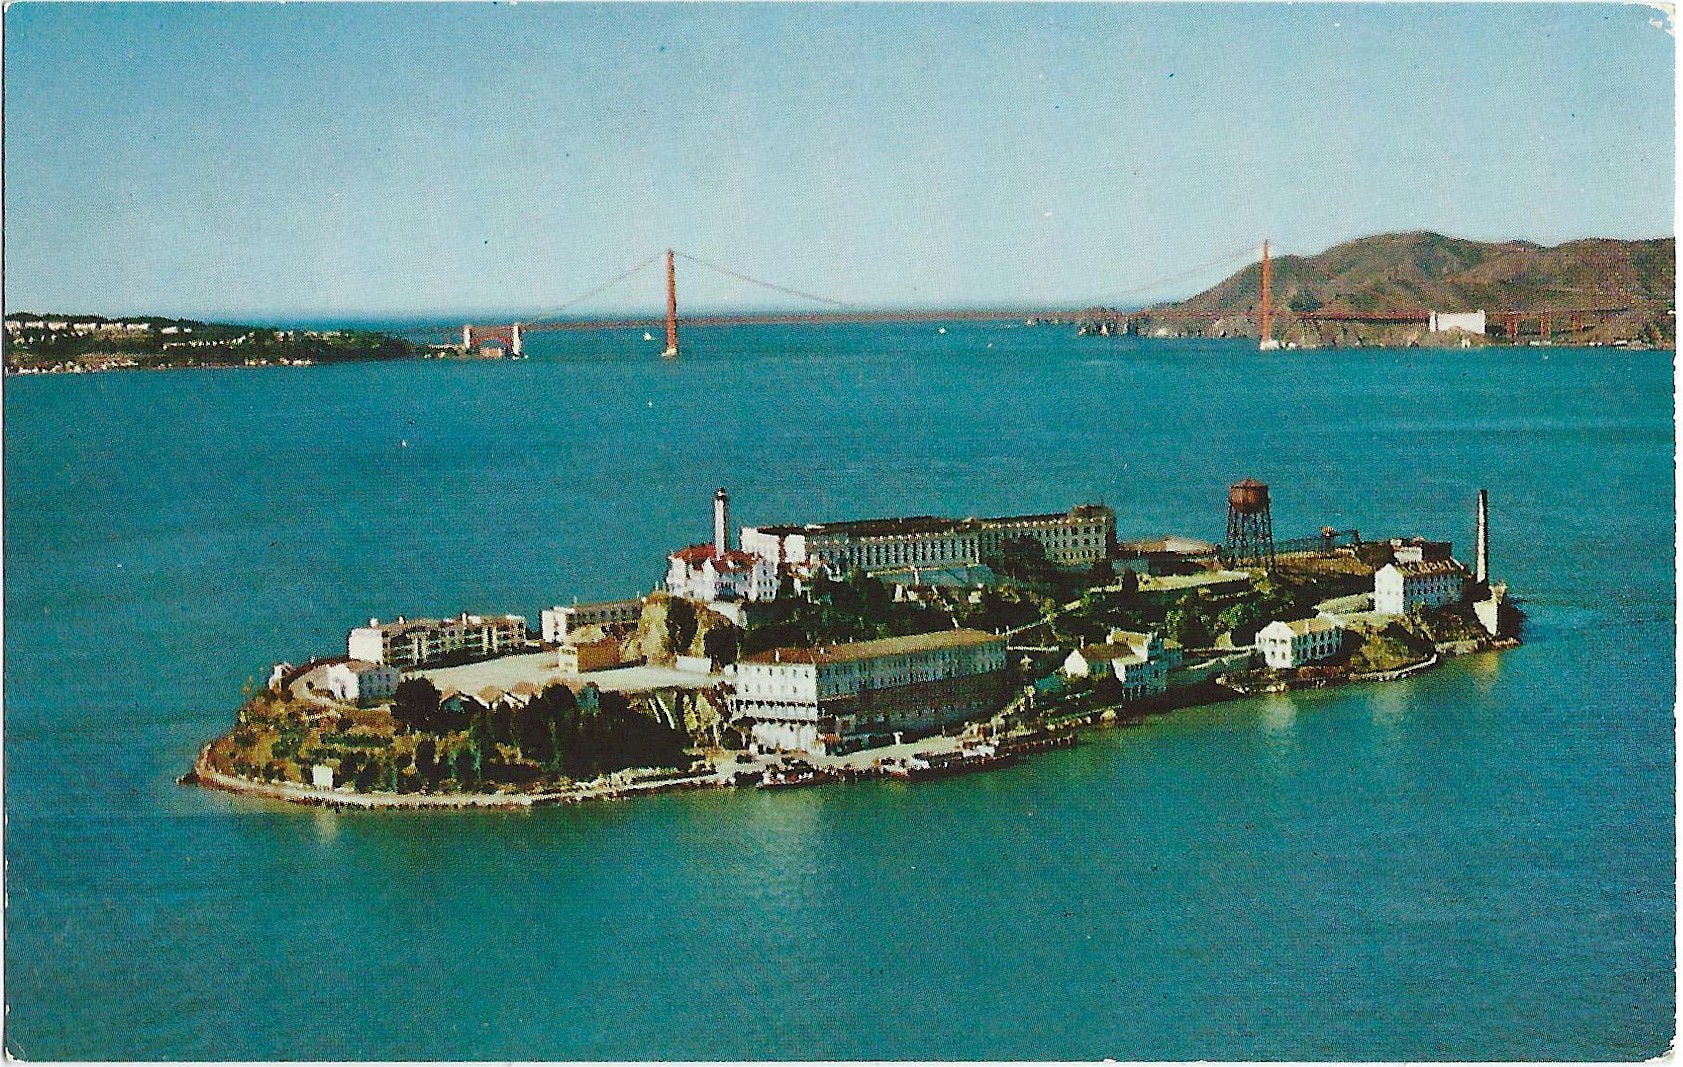 Alcatraz Island and the Golden Gate Bridge, San Francisco, Calif